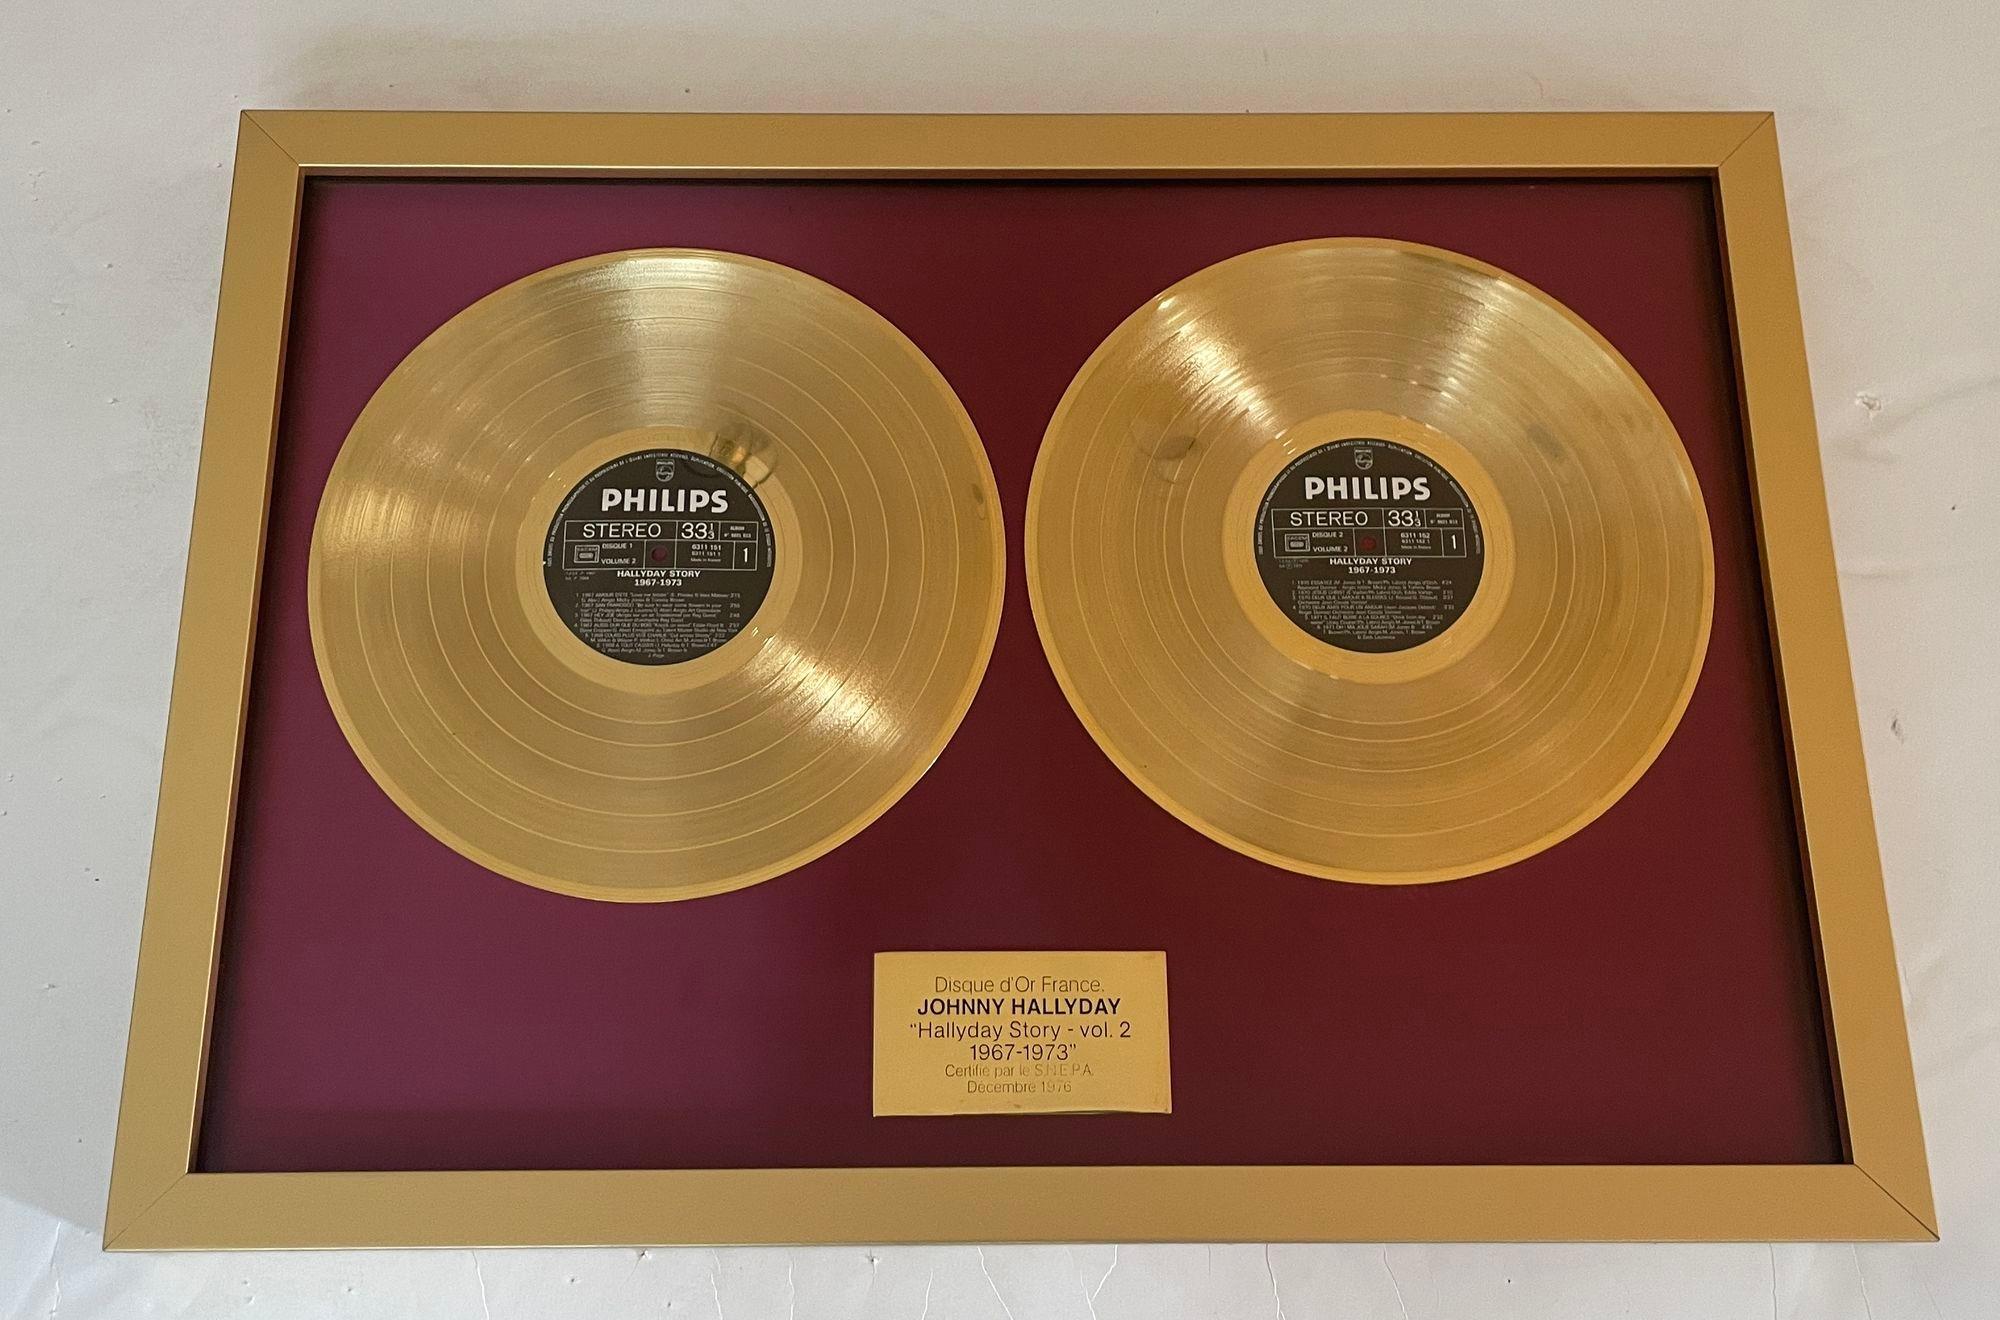 Goldene Schallplatte - Official Disque d'Or France Johnny Hallyday 